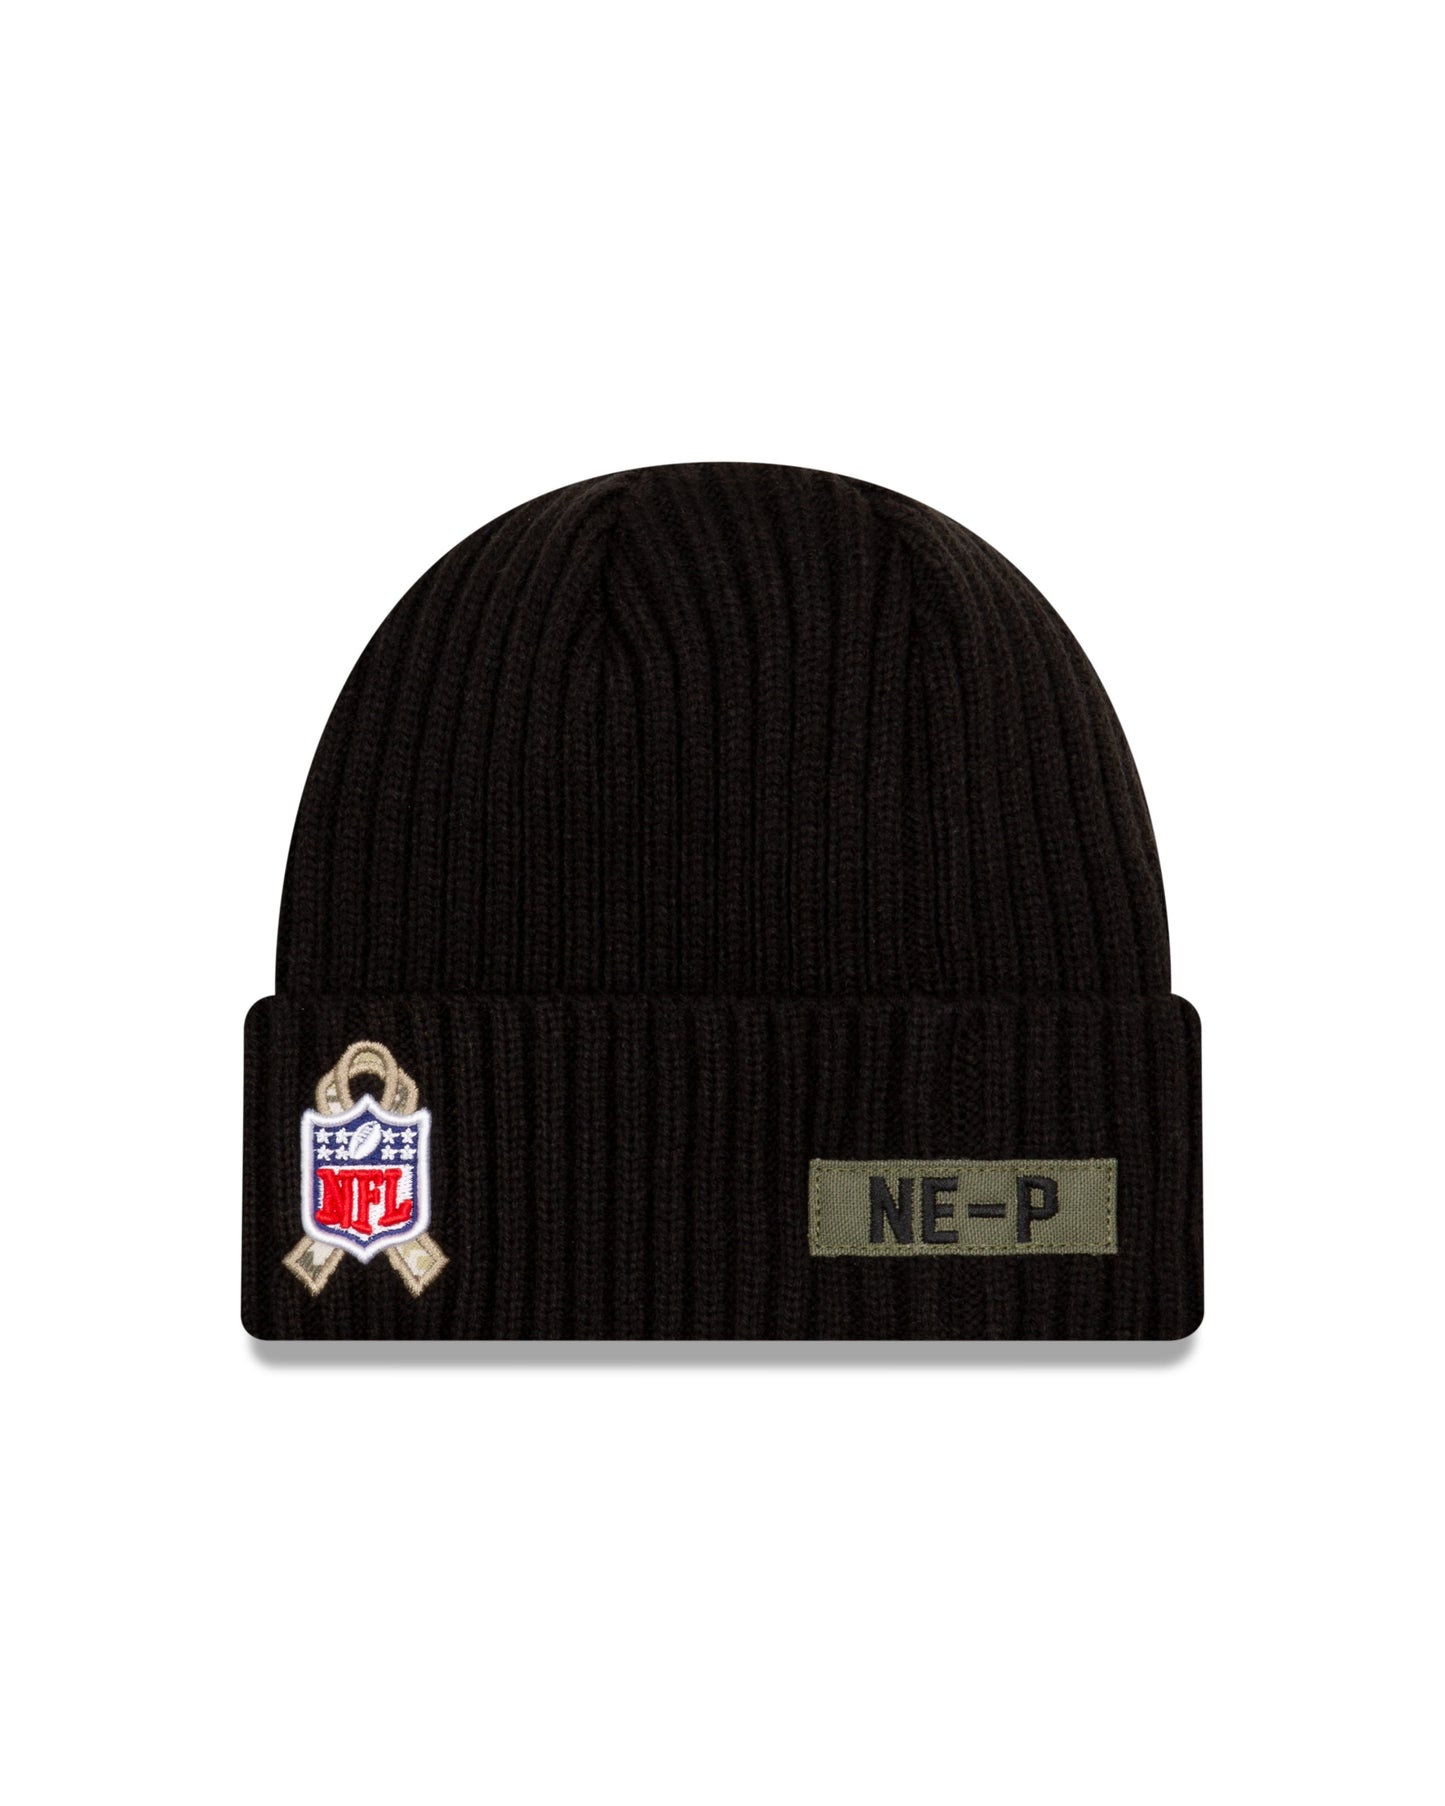 New England Patriots New Era Salute to Service Knit Hat- Black